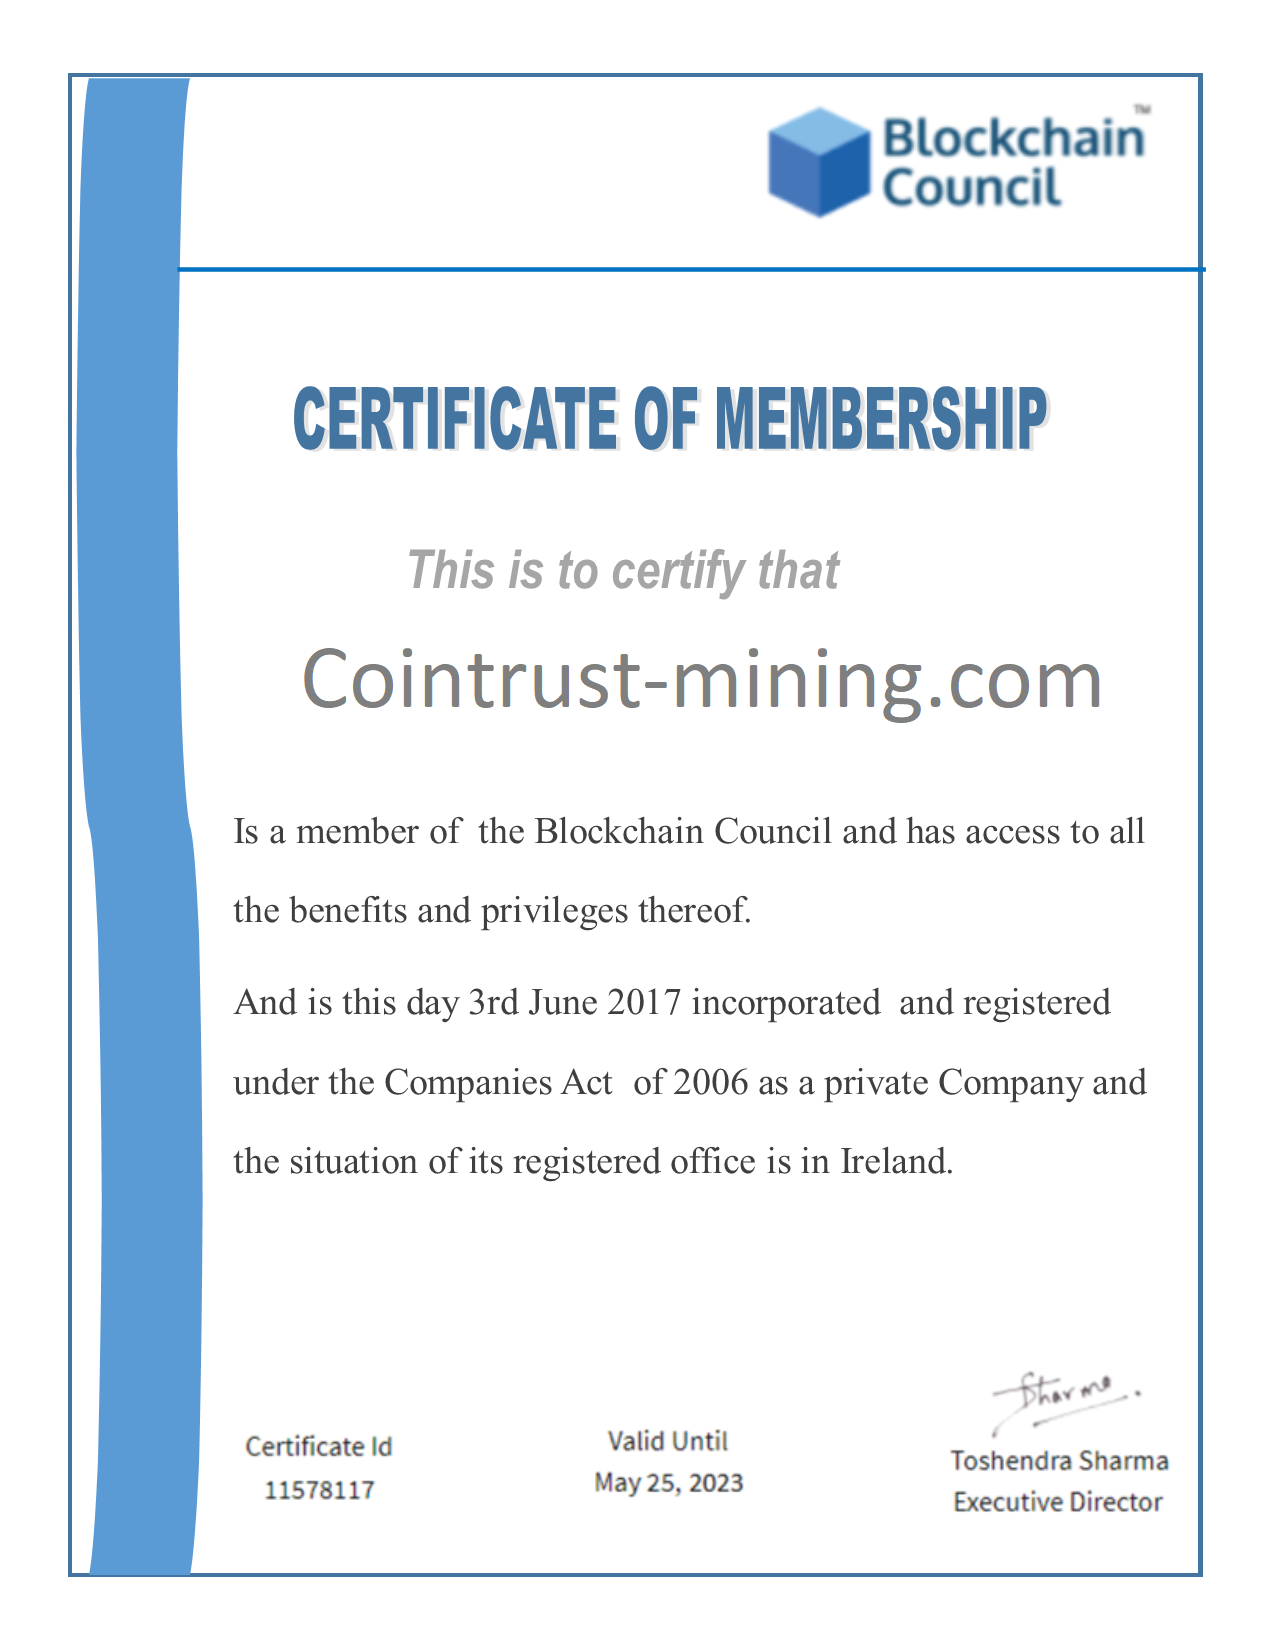 Cointrust-mining